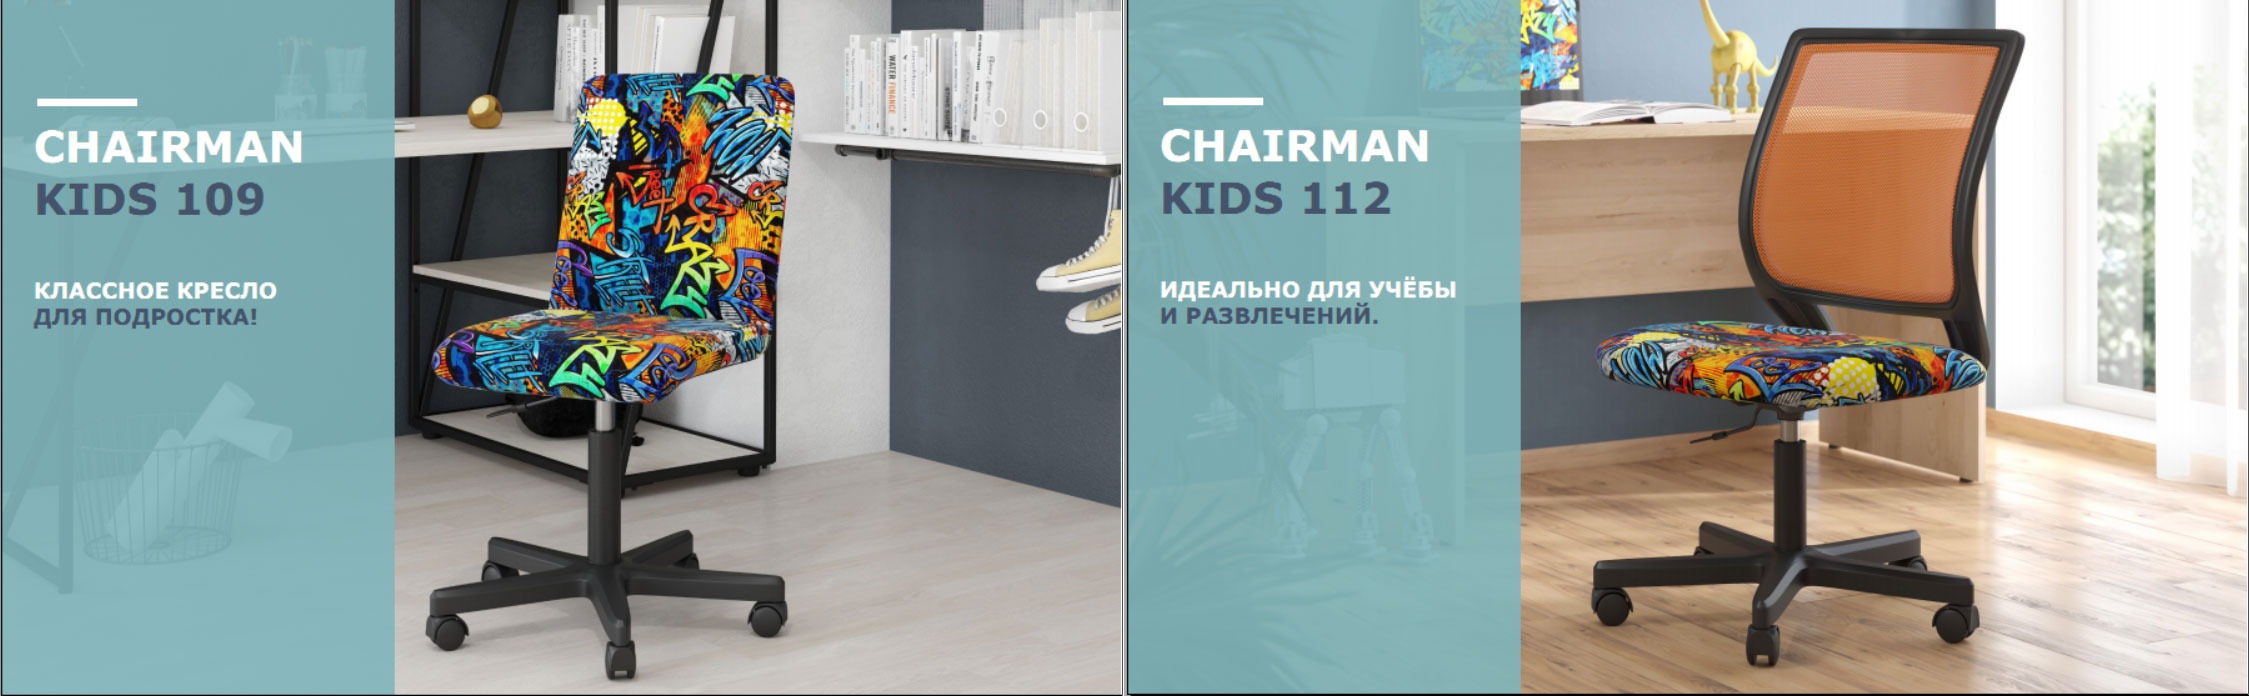 CHAIRMAN KIDS 109 и KIDS 112